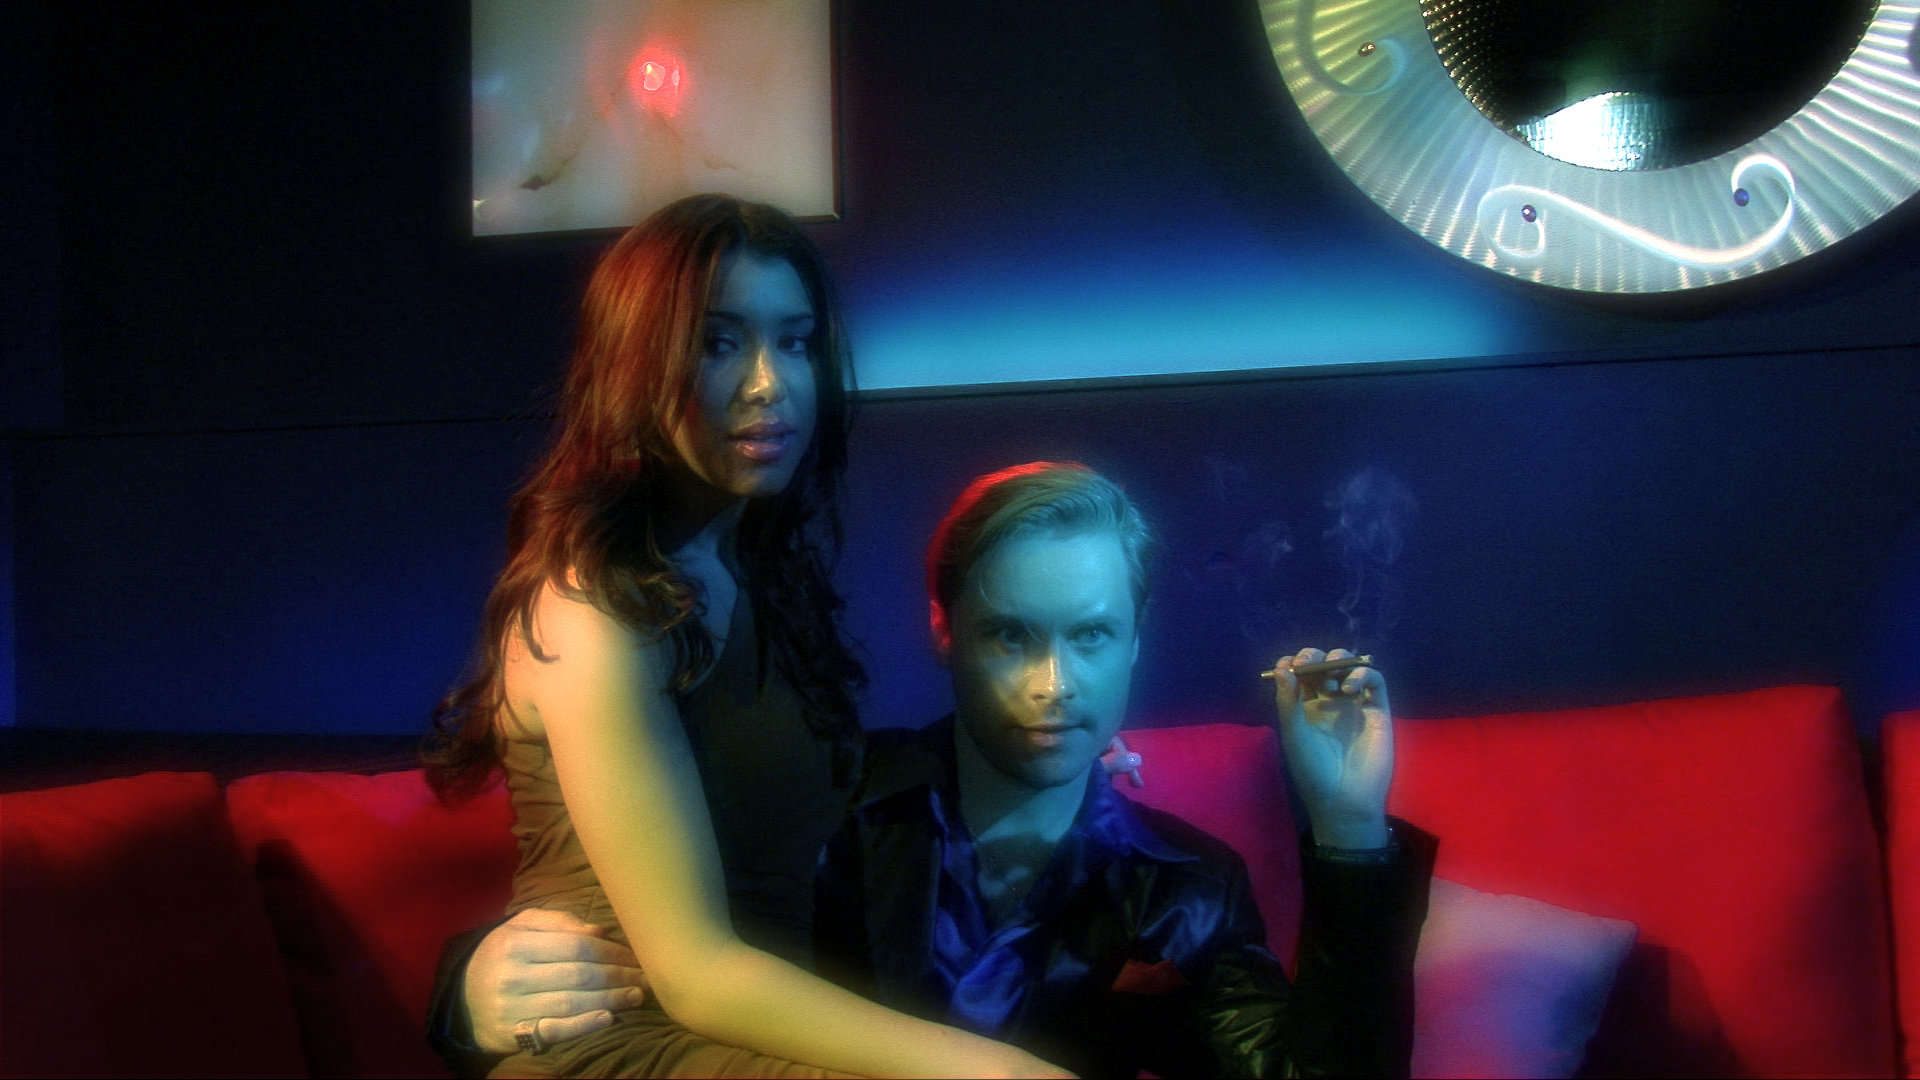 Samantha (Lisa Weldon) and Sidorov (Konstantin Soukhovetski) at the club.